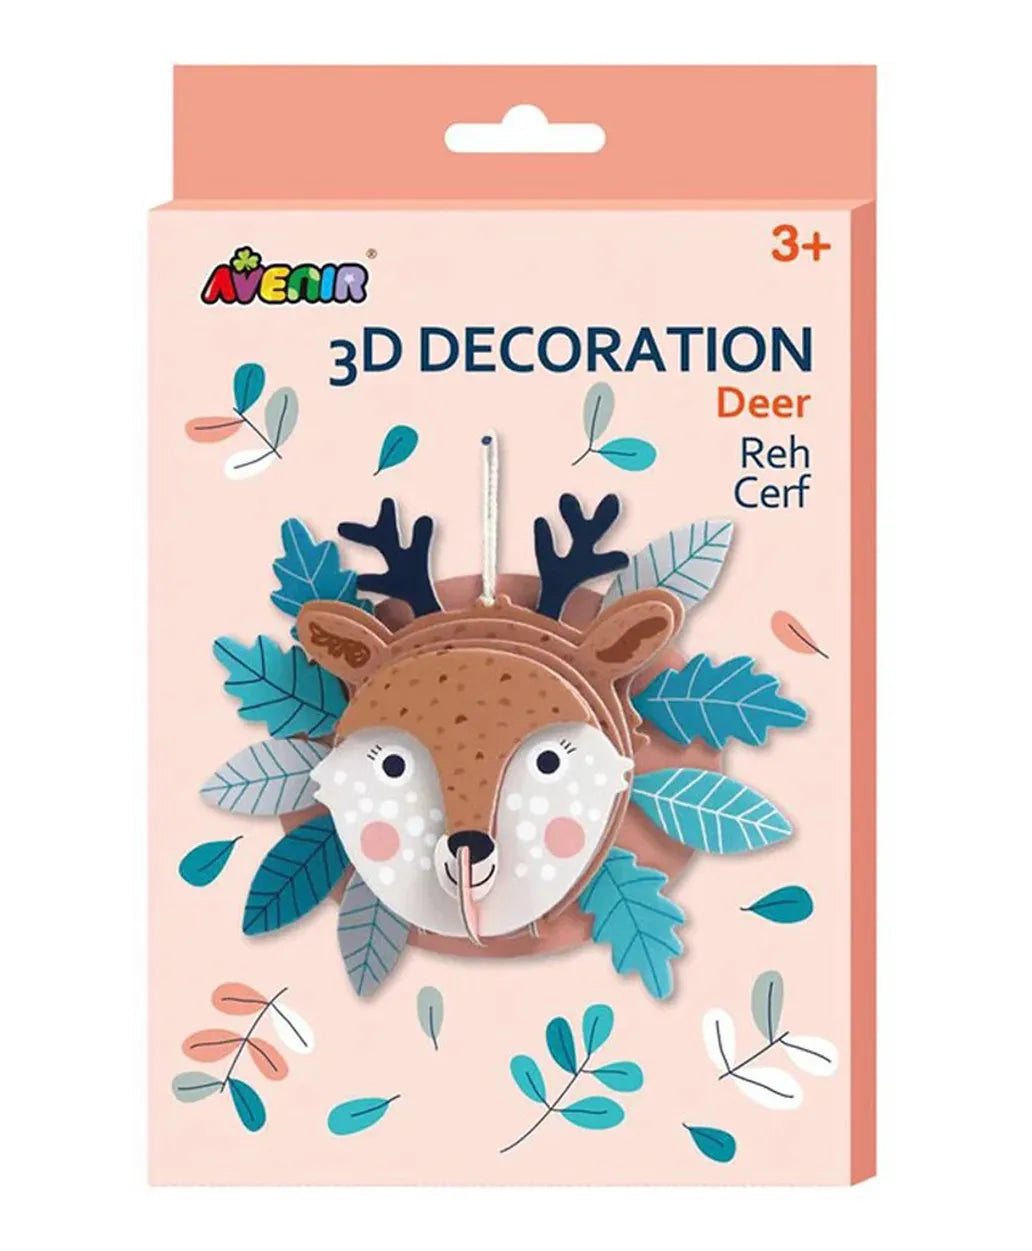 Avenir 3D Decoration Kit - Deer